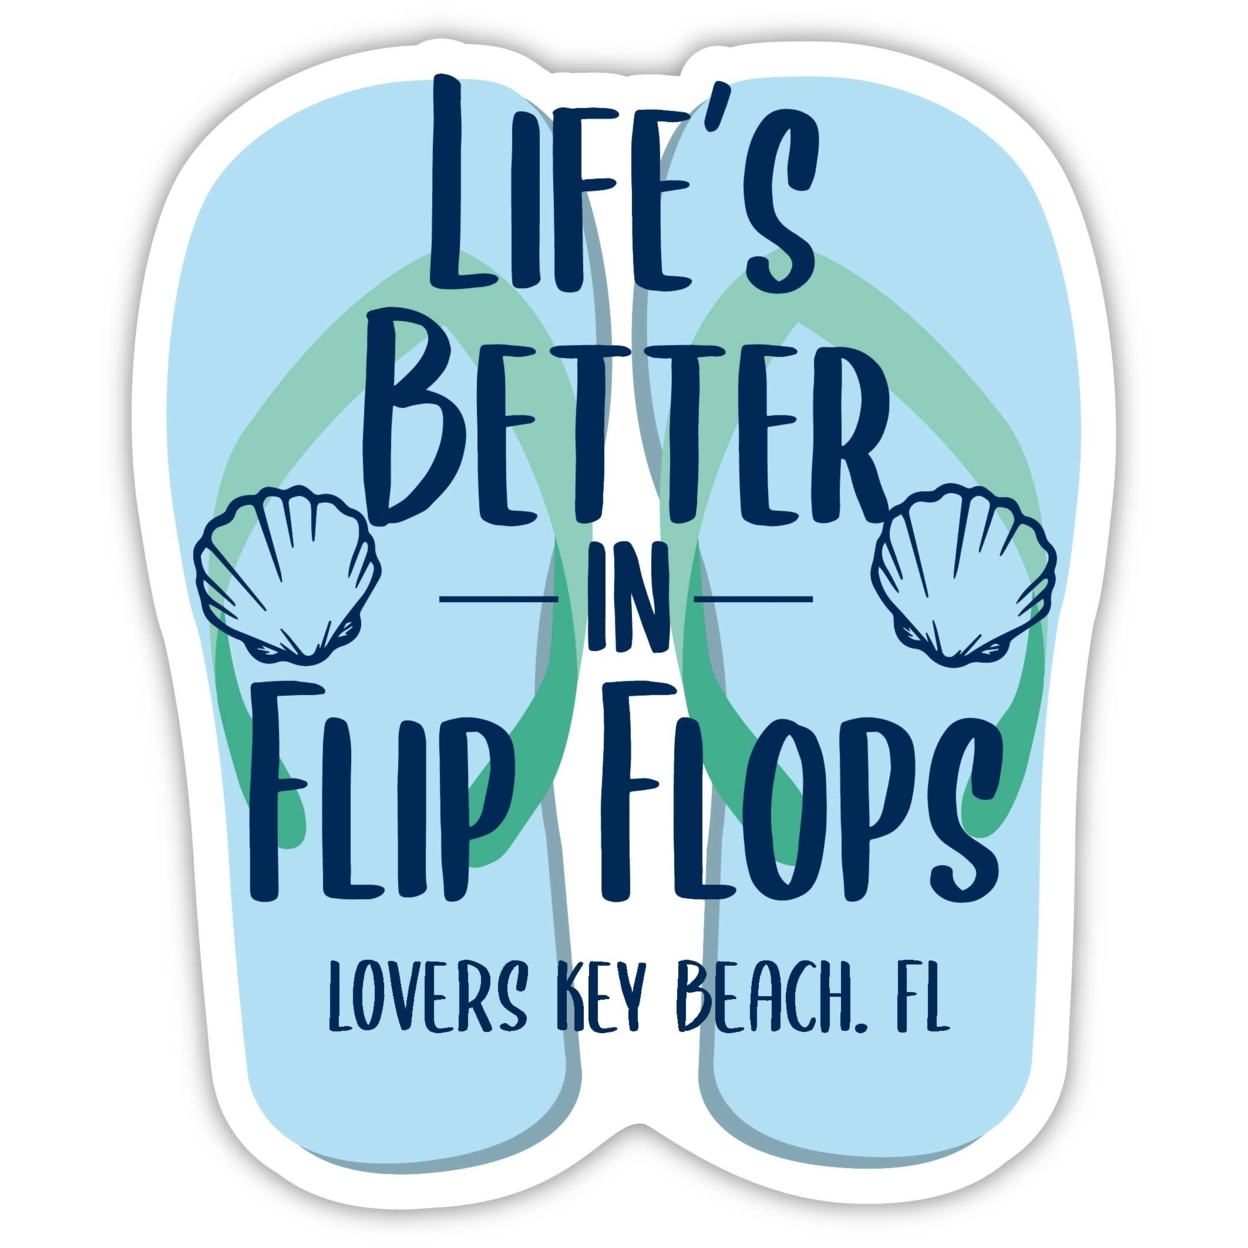 Lovers Key Beach Florida Souvenir 4 Inch Vinyl Decal Sticker Flip Flop Design